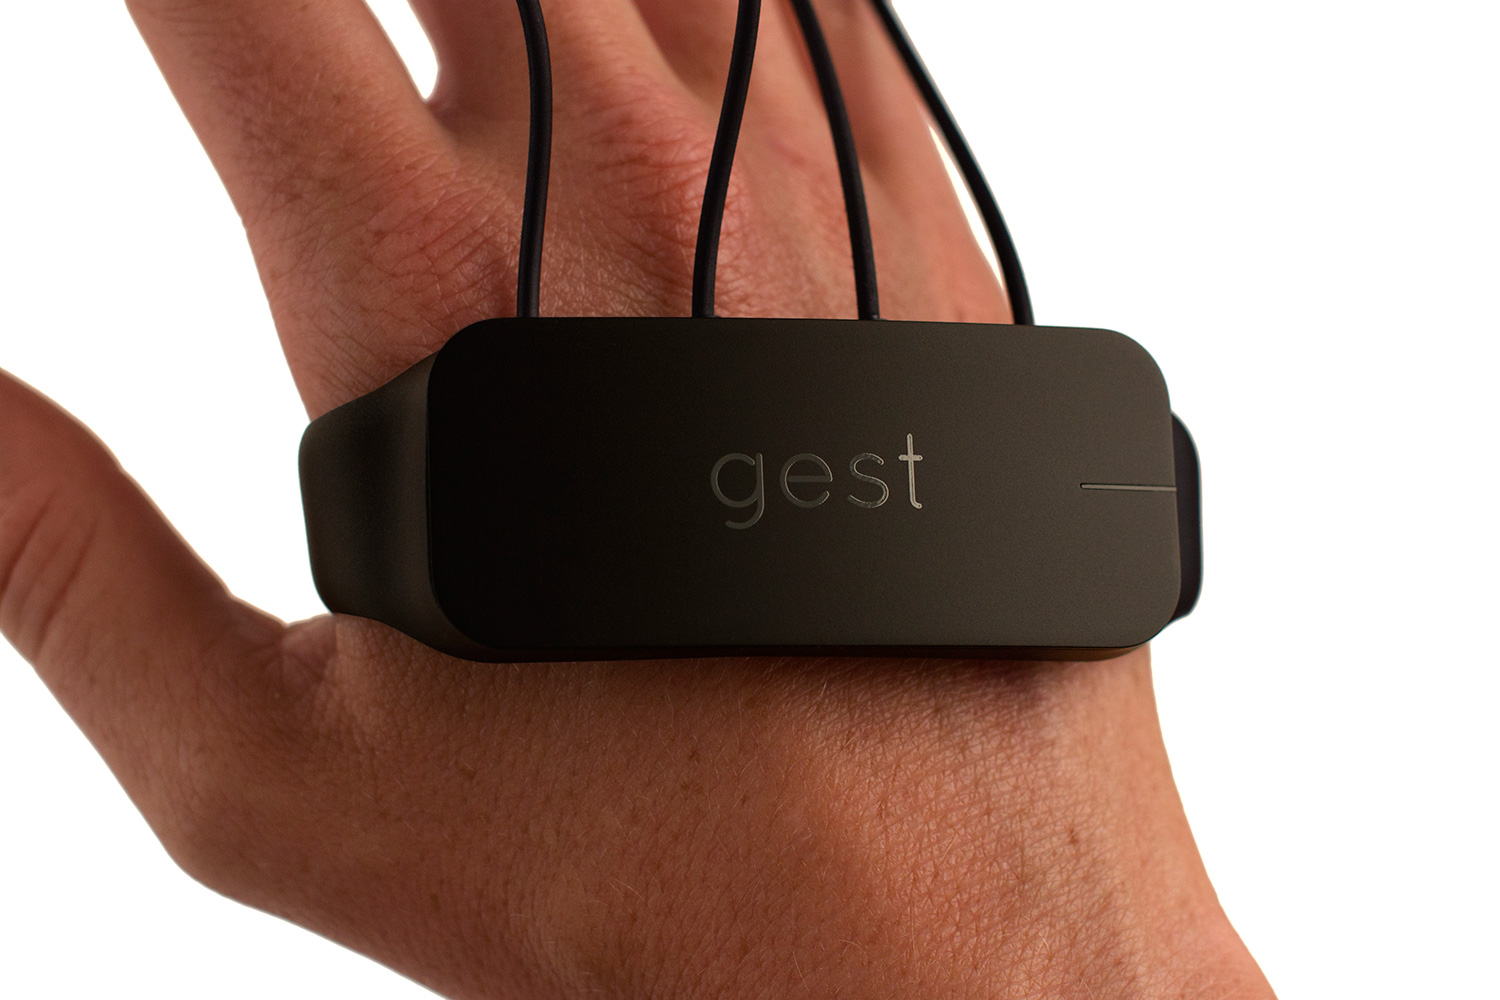 gest gesture sensing glove kickstarter black close